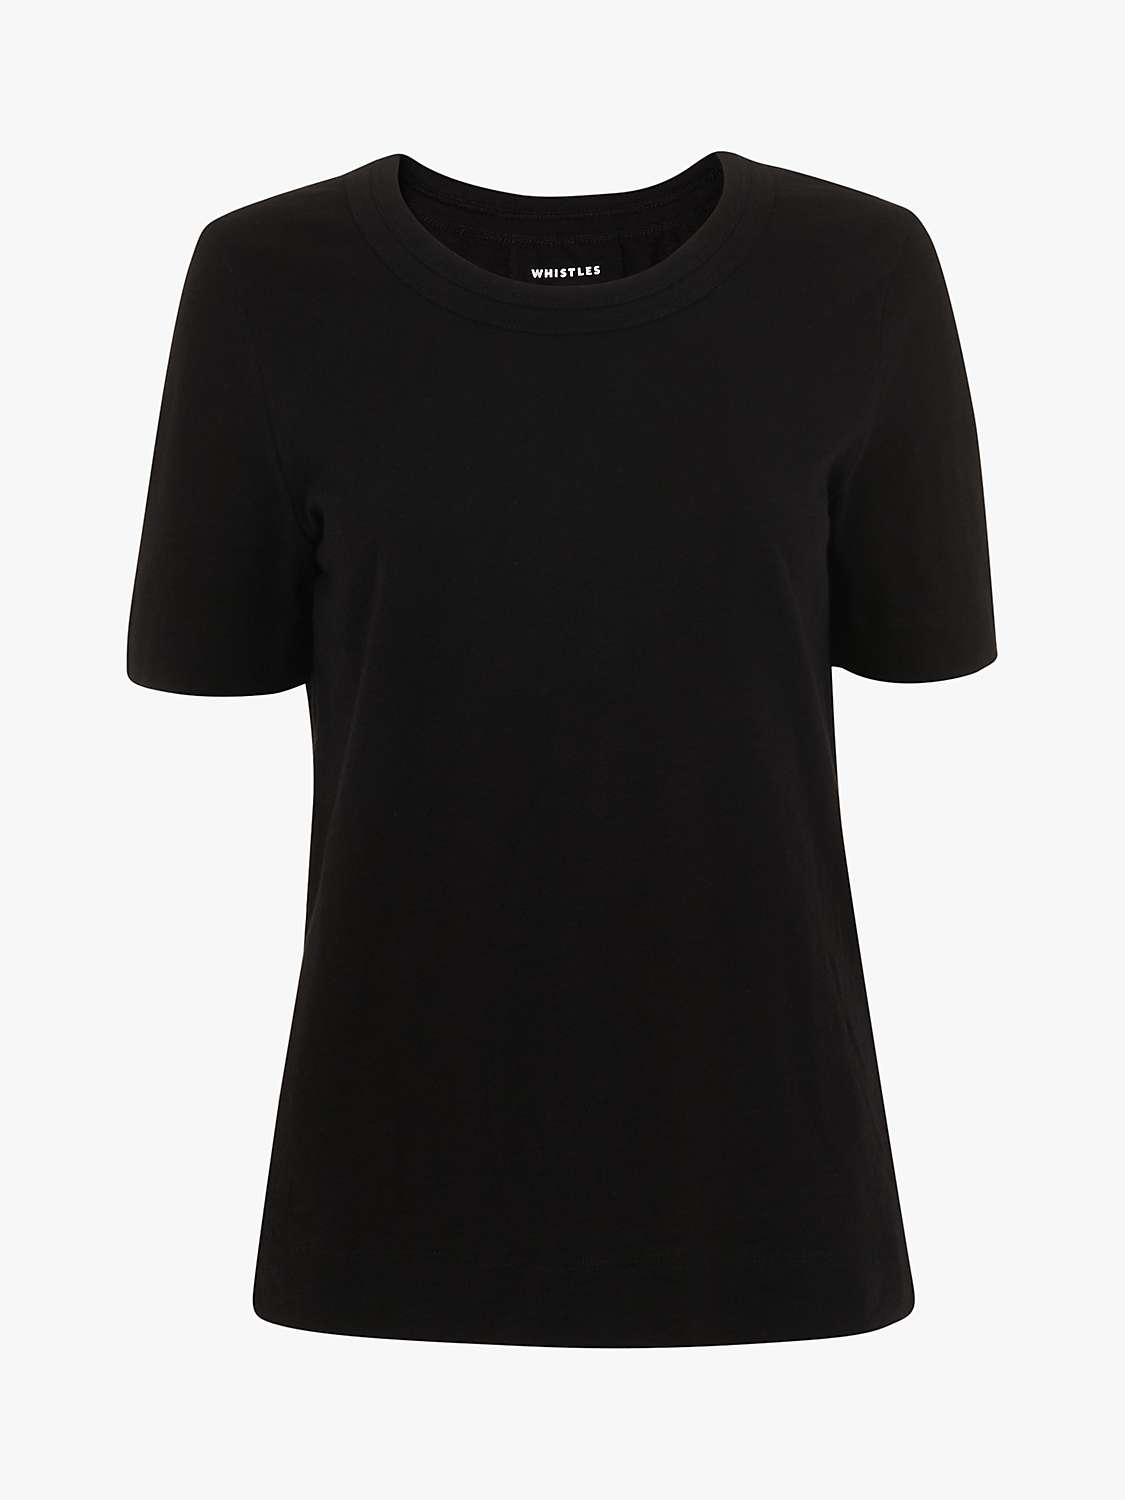 Whistles Rosa Double Trim Cotton T-Shirt, Black at John Lewis & Partners